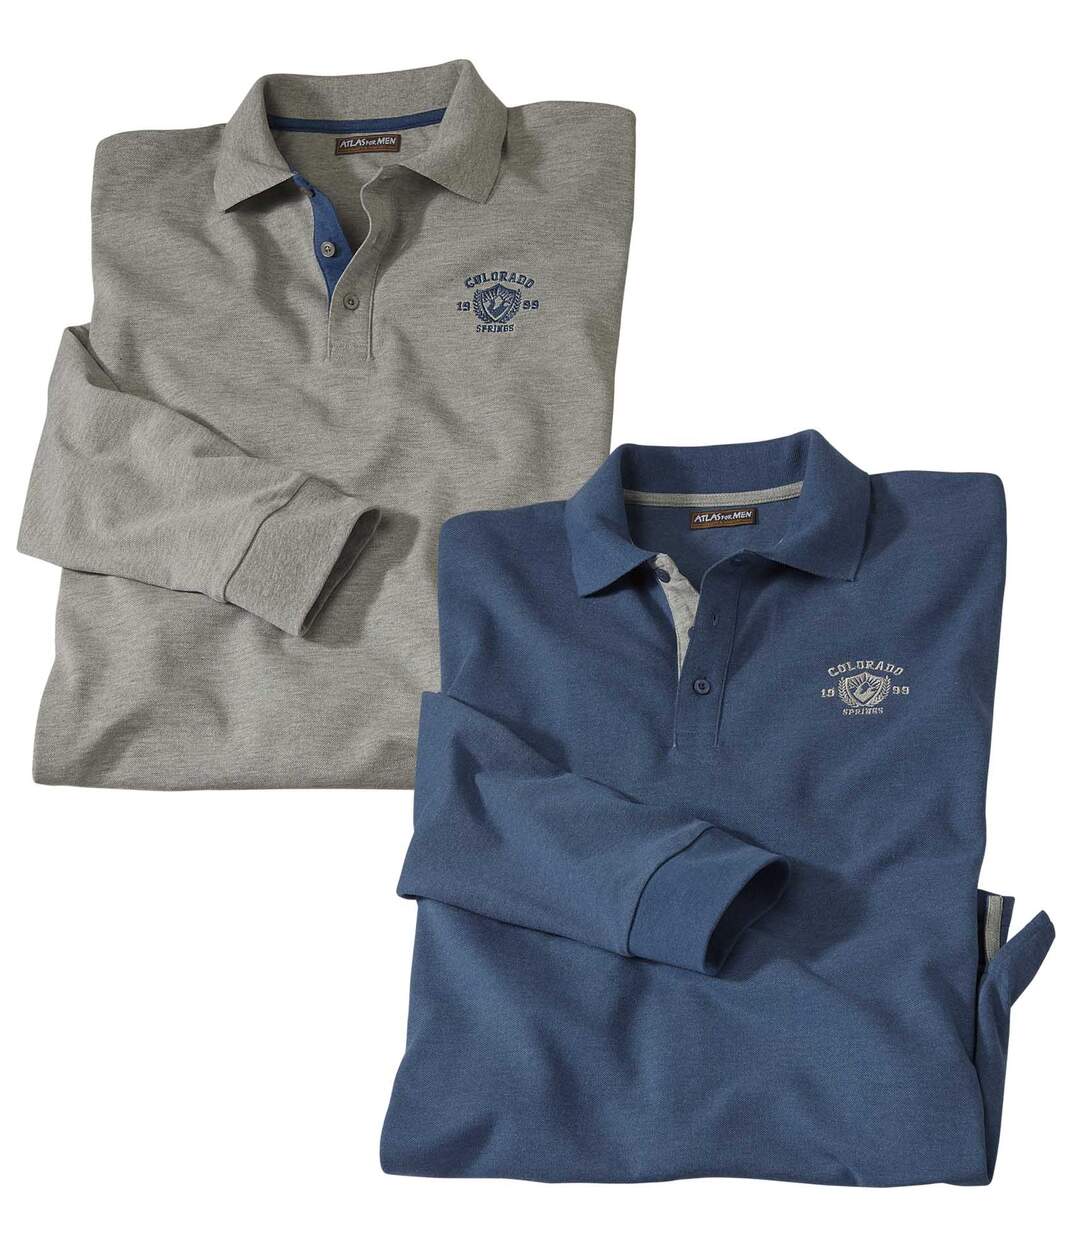 Pack of 2 Men's Long Sleeve Piqué Polo Shirts - Mottled Blue and Grey Atlas For Men